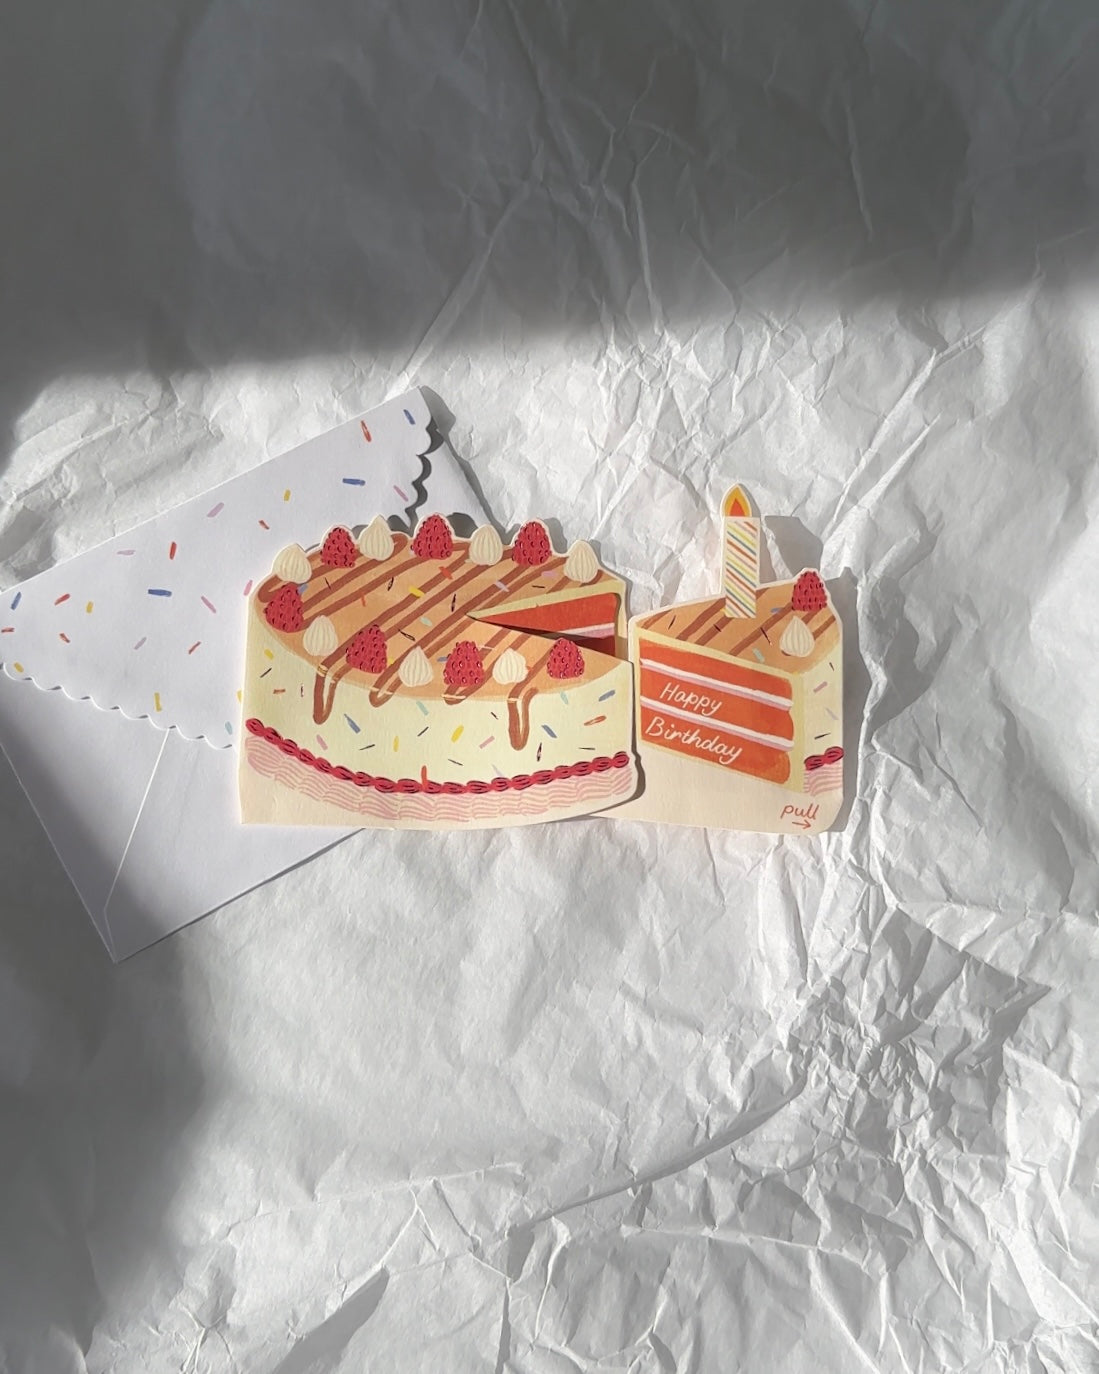 Petite Interactive Card - Birthday Cake